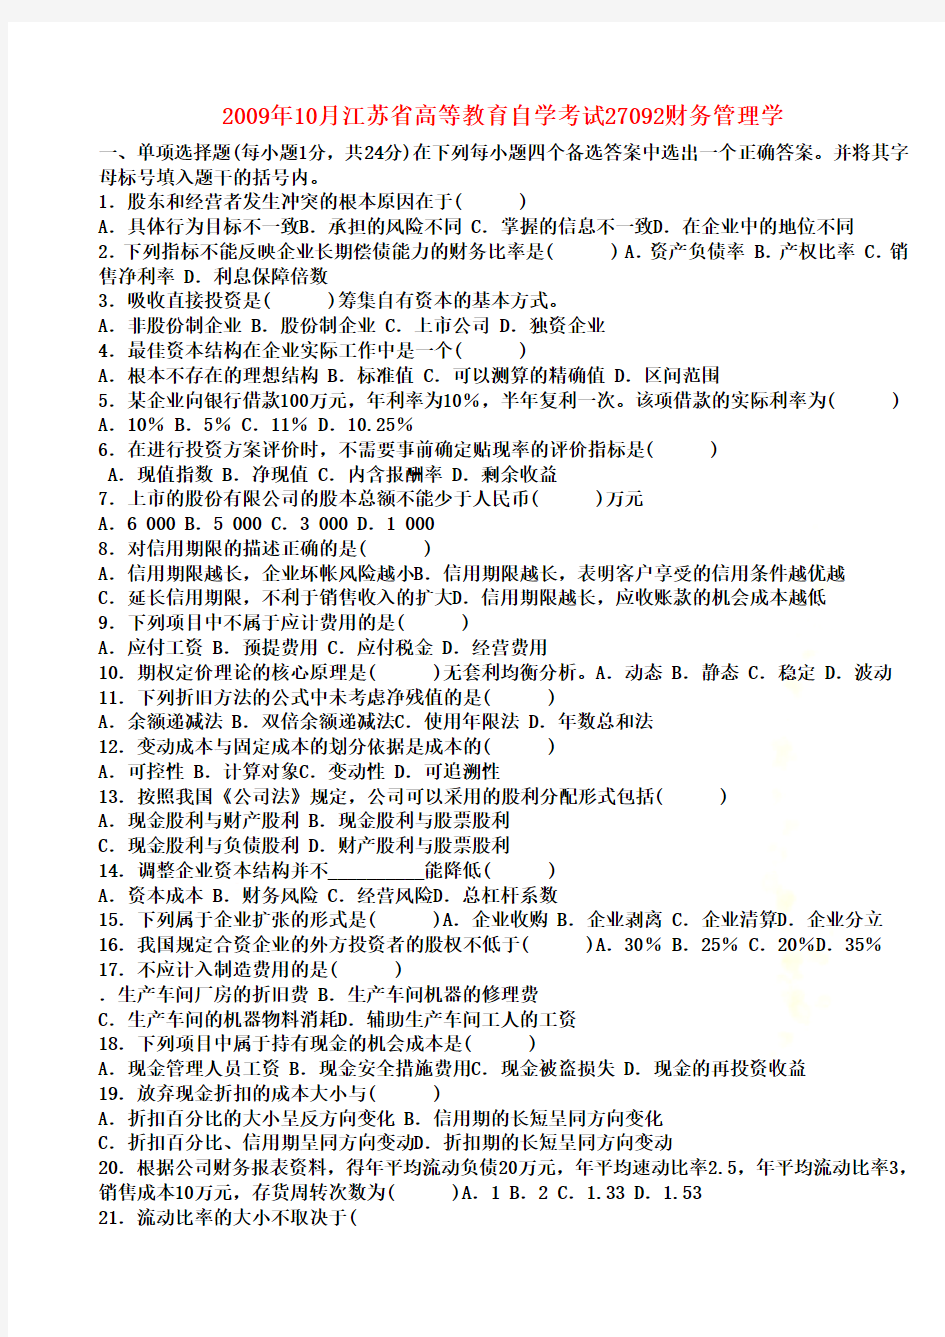 X年10月江苏省高等教育自学考试27092财务管理学